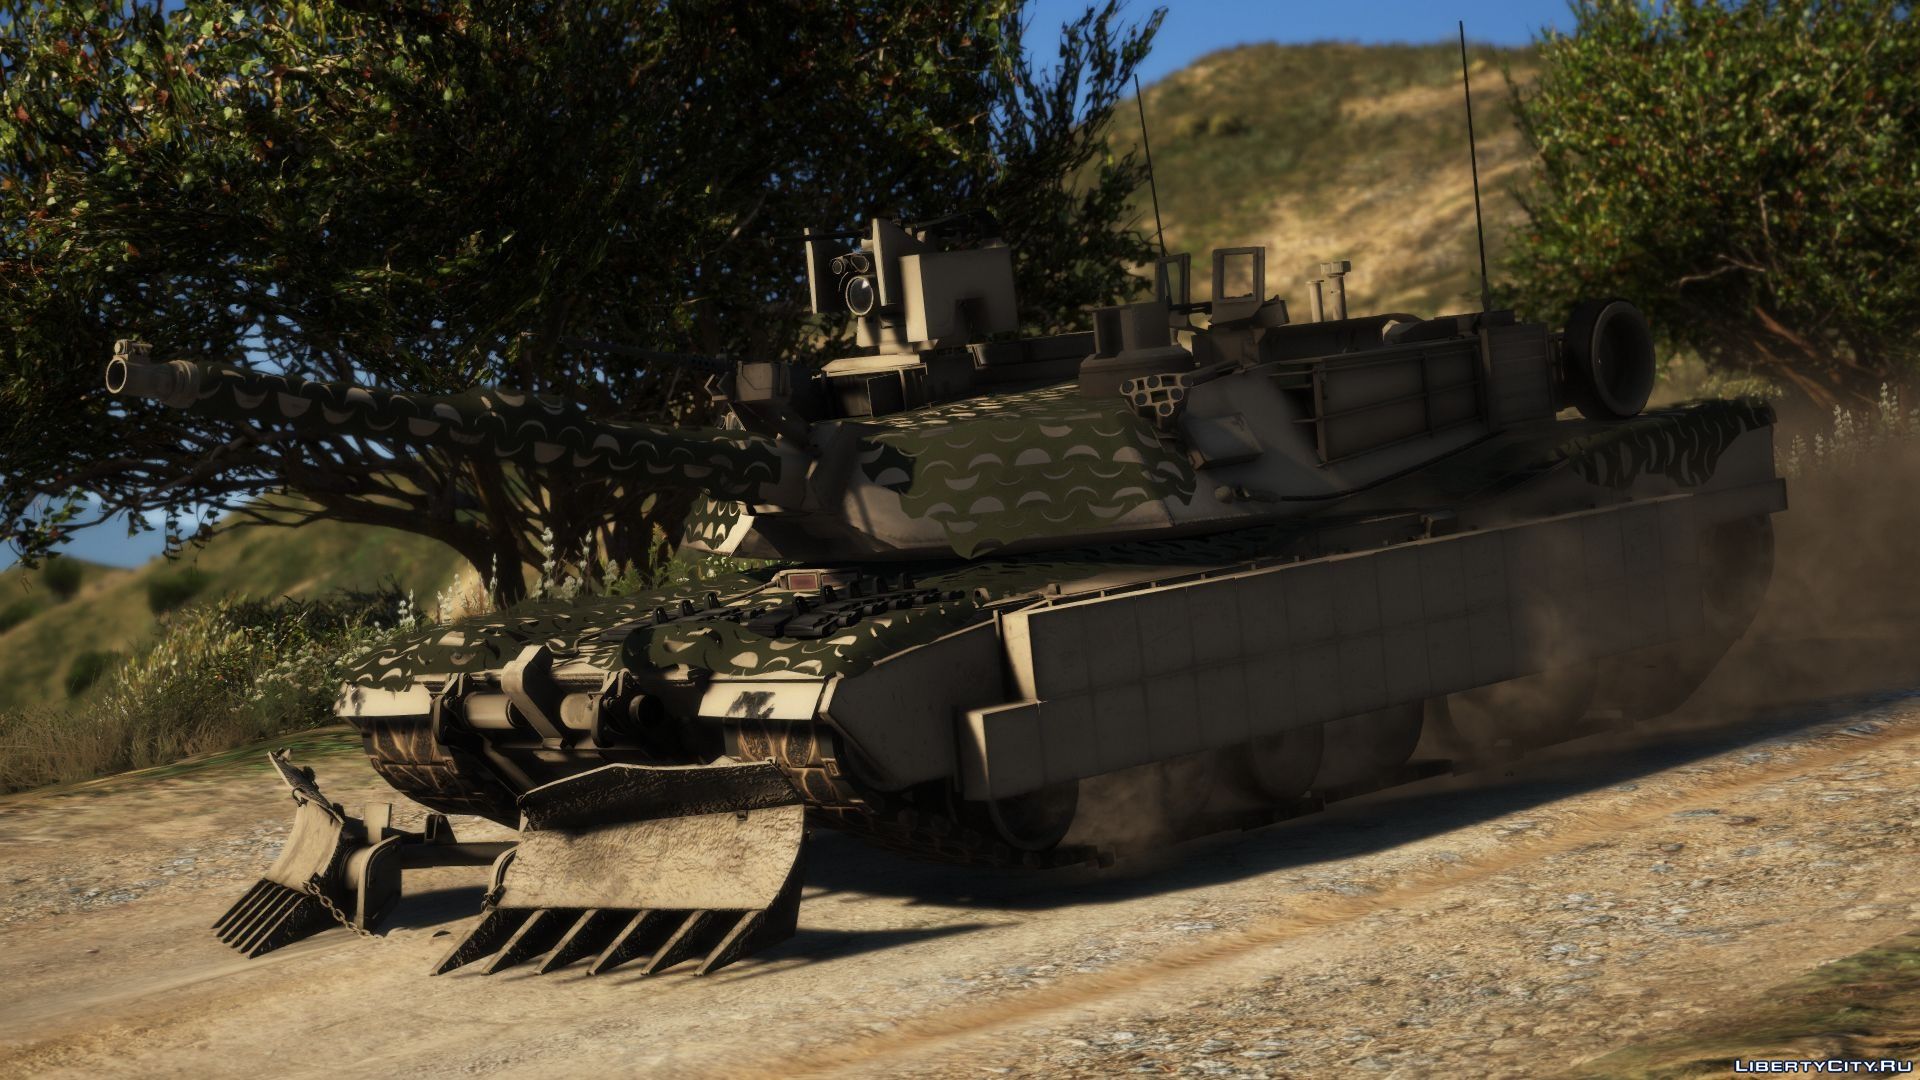 Tank tune. GTA 5 Abrams. Мод на танк Абрамс в ГТА 5. GTA 5 танк. Военные машины в ГТА 5.